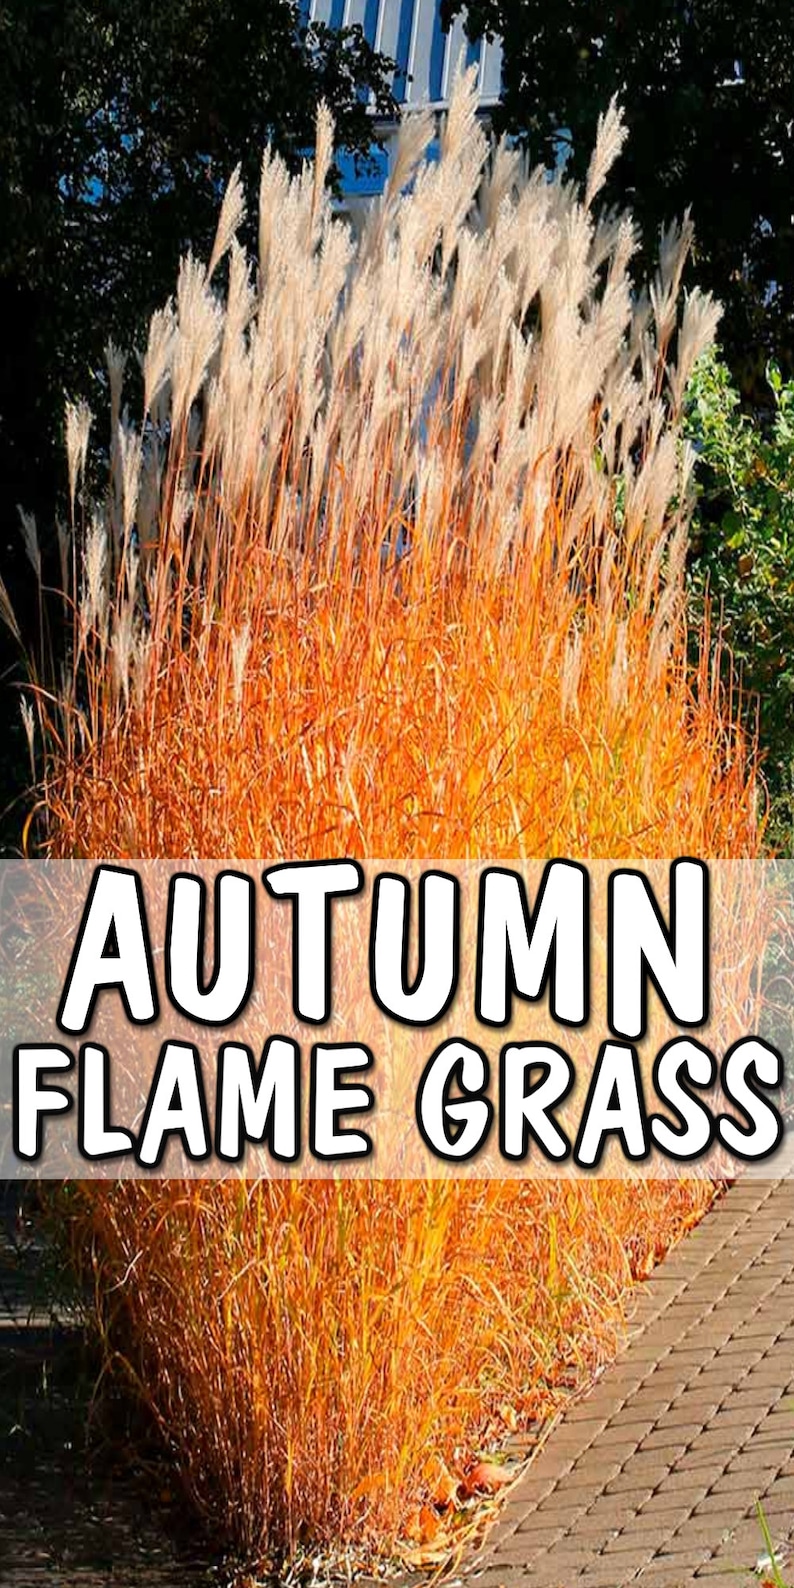 Autumn Flame Grass Purpurascens Perennial Ornamental 1 Live Plant Clumping Fast Growing Plants dormant through winter image 7